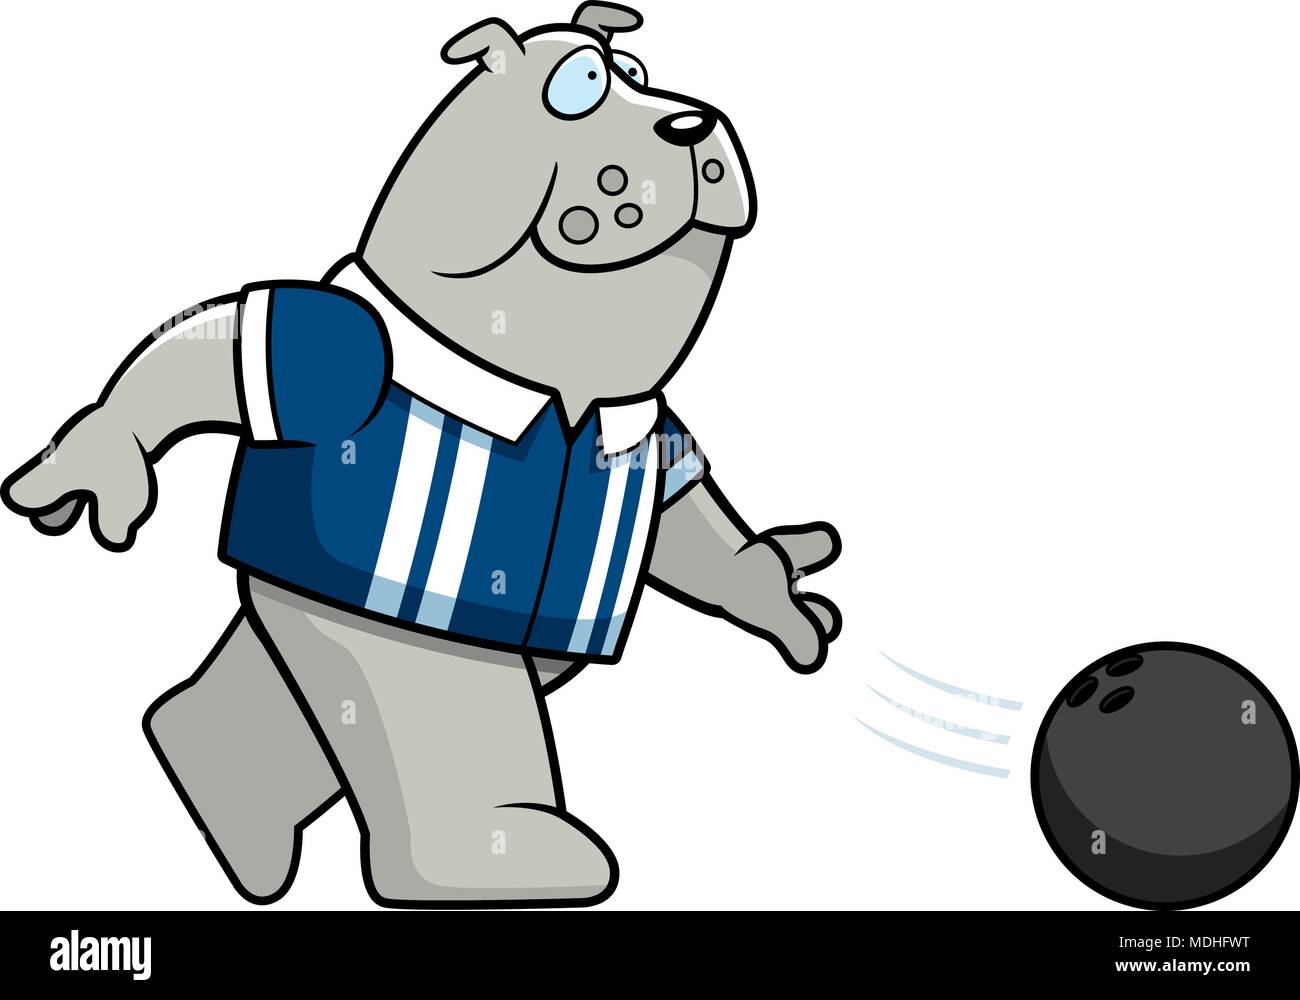 A cartoon illustration of a bulldog bowling a ball. Stock Vector